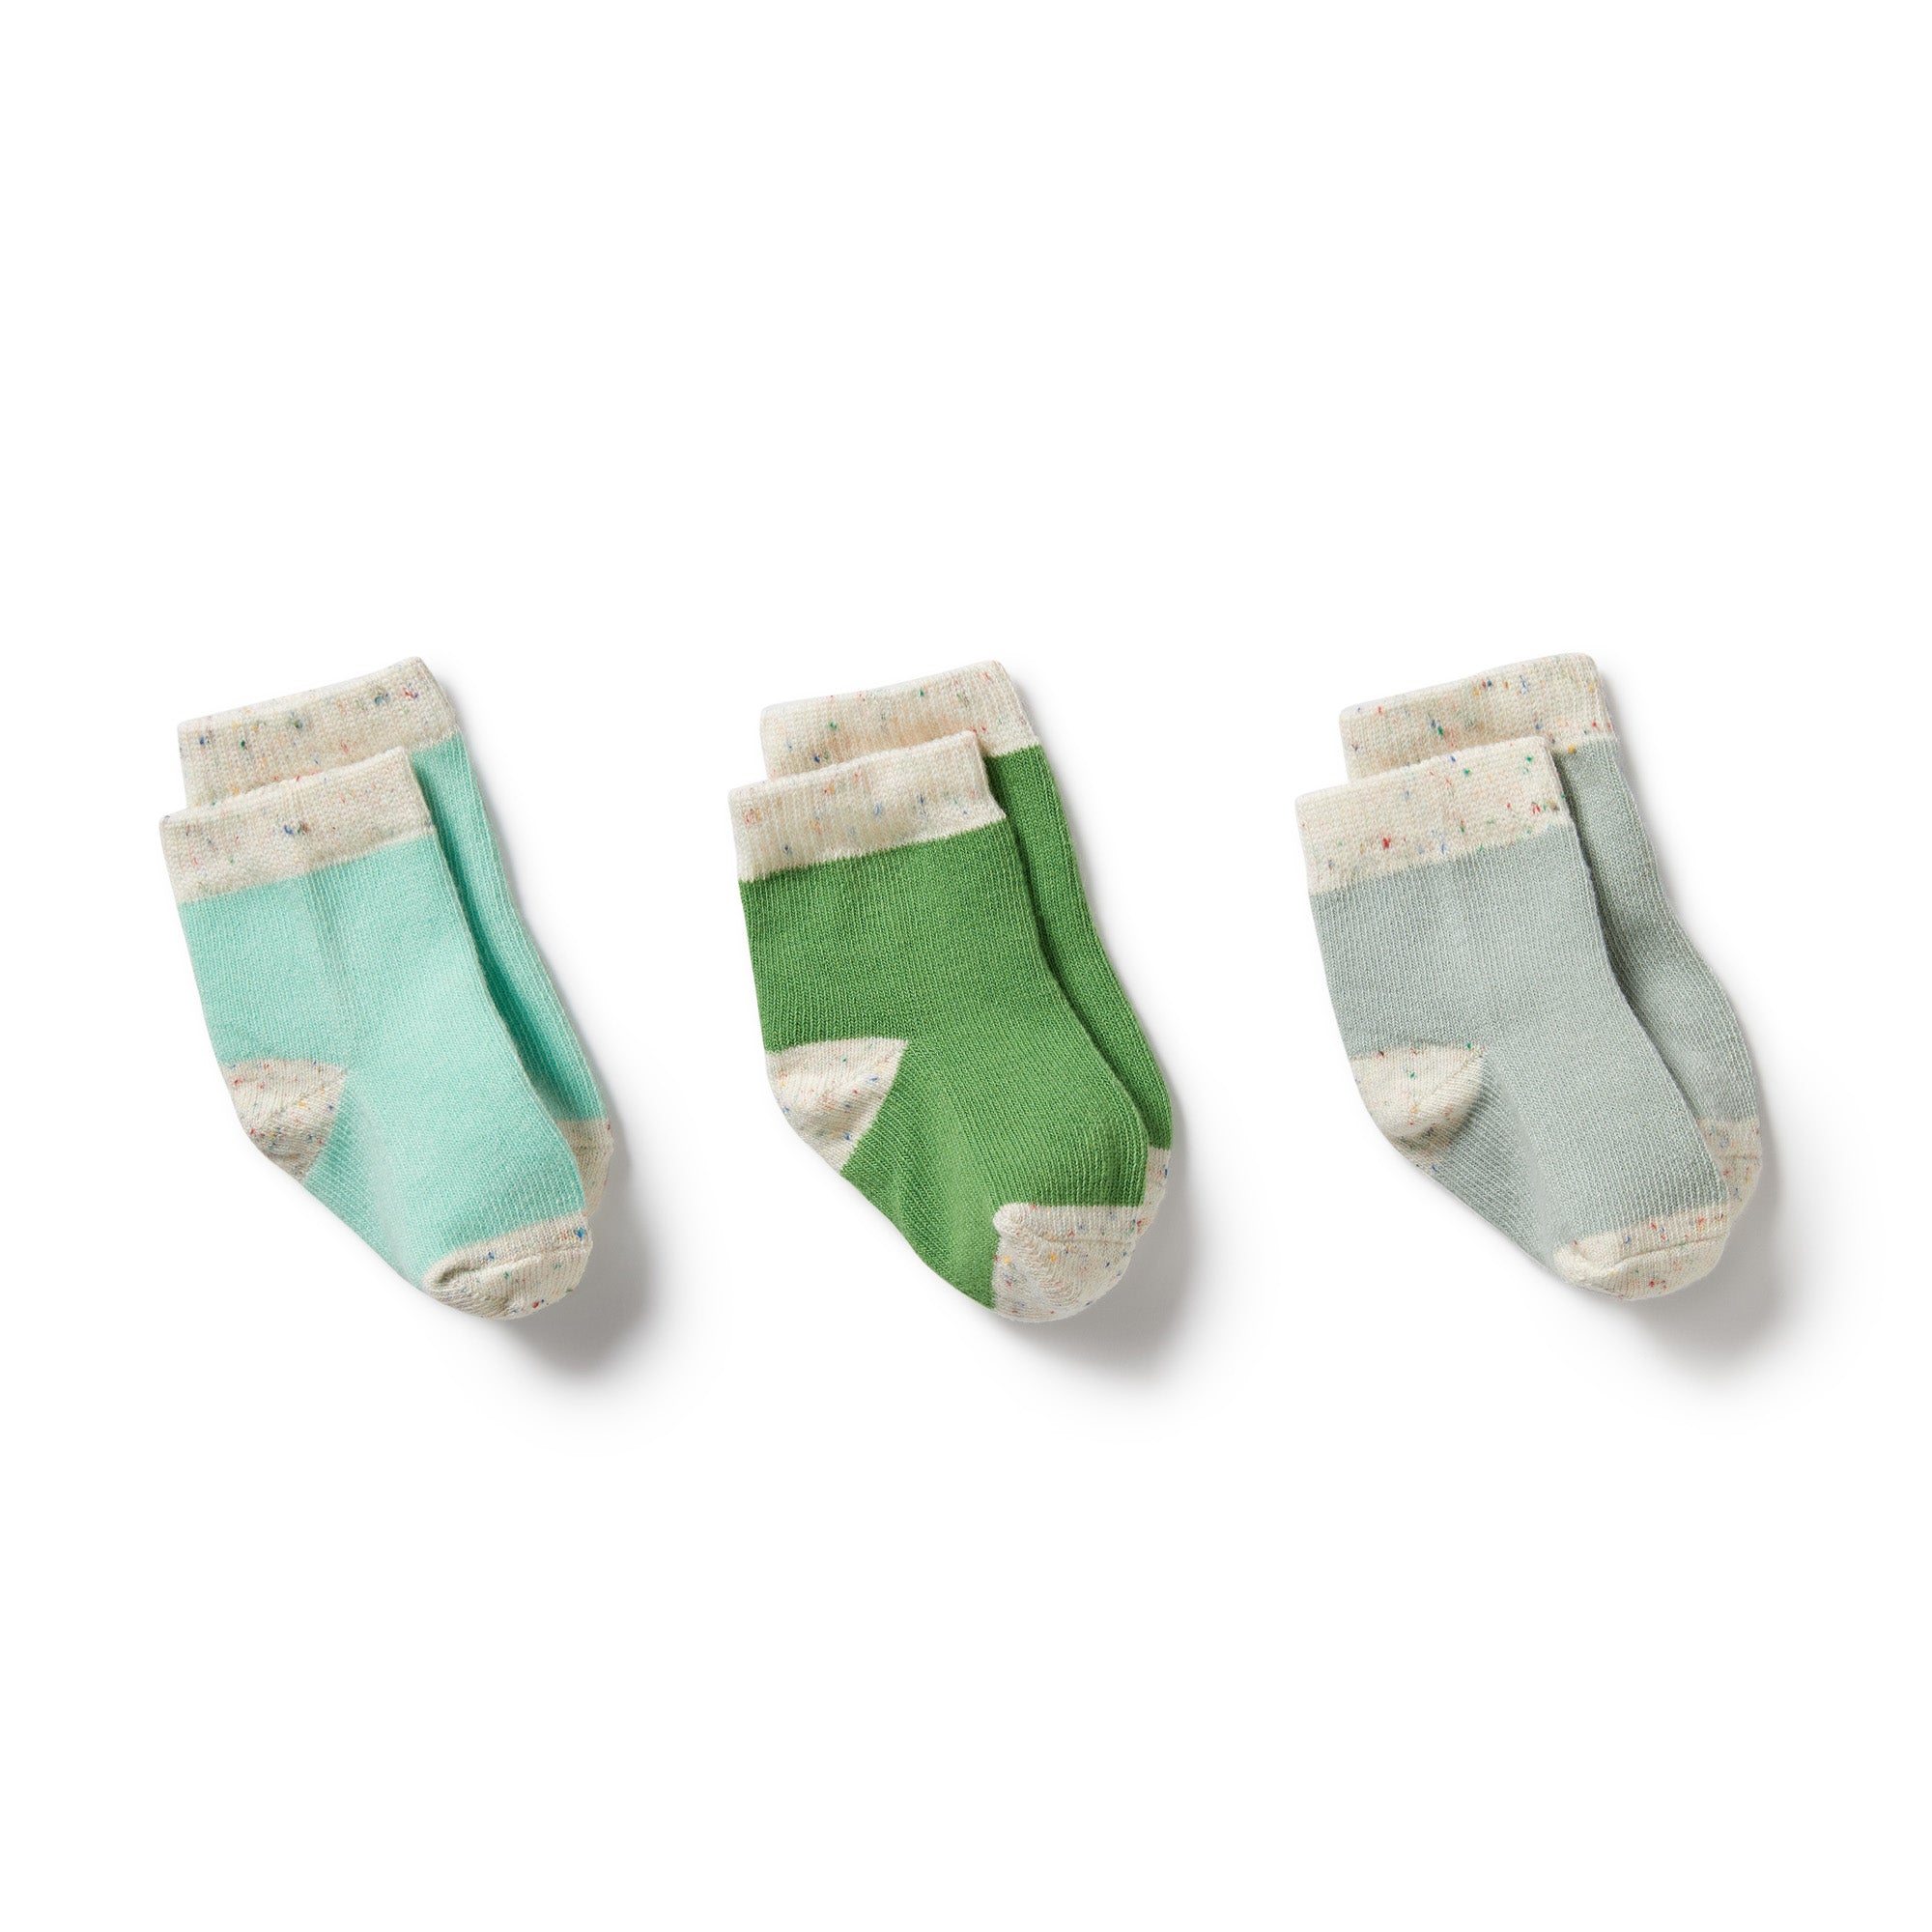 Wilson & Frenchy - Organic 3 Pack Baby Socks - Mint Green, Cactus, Smoke Blue